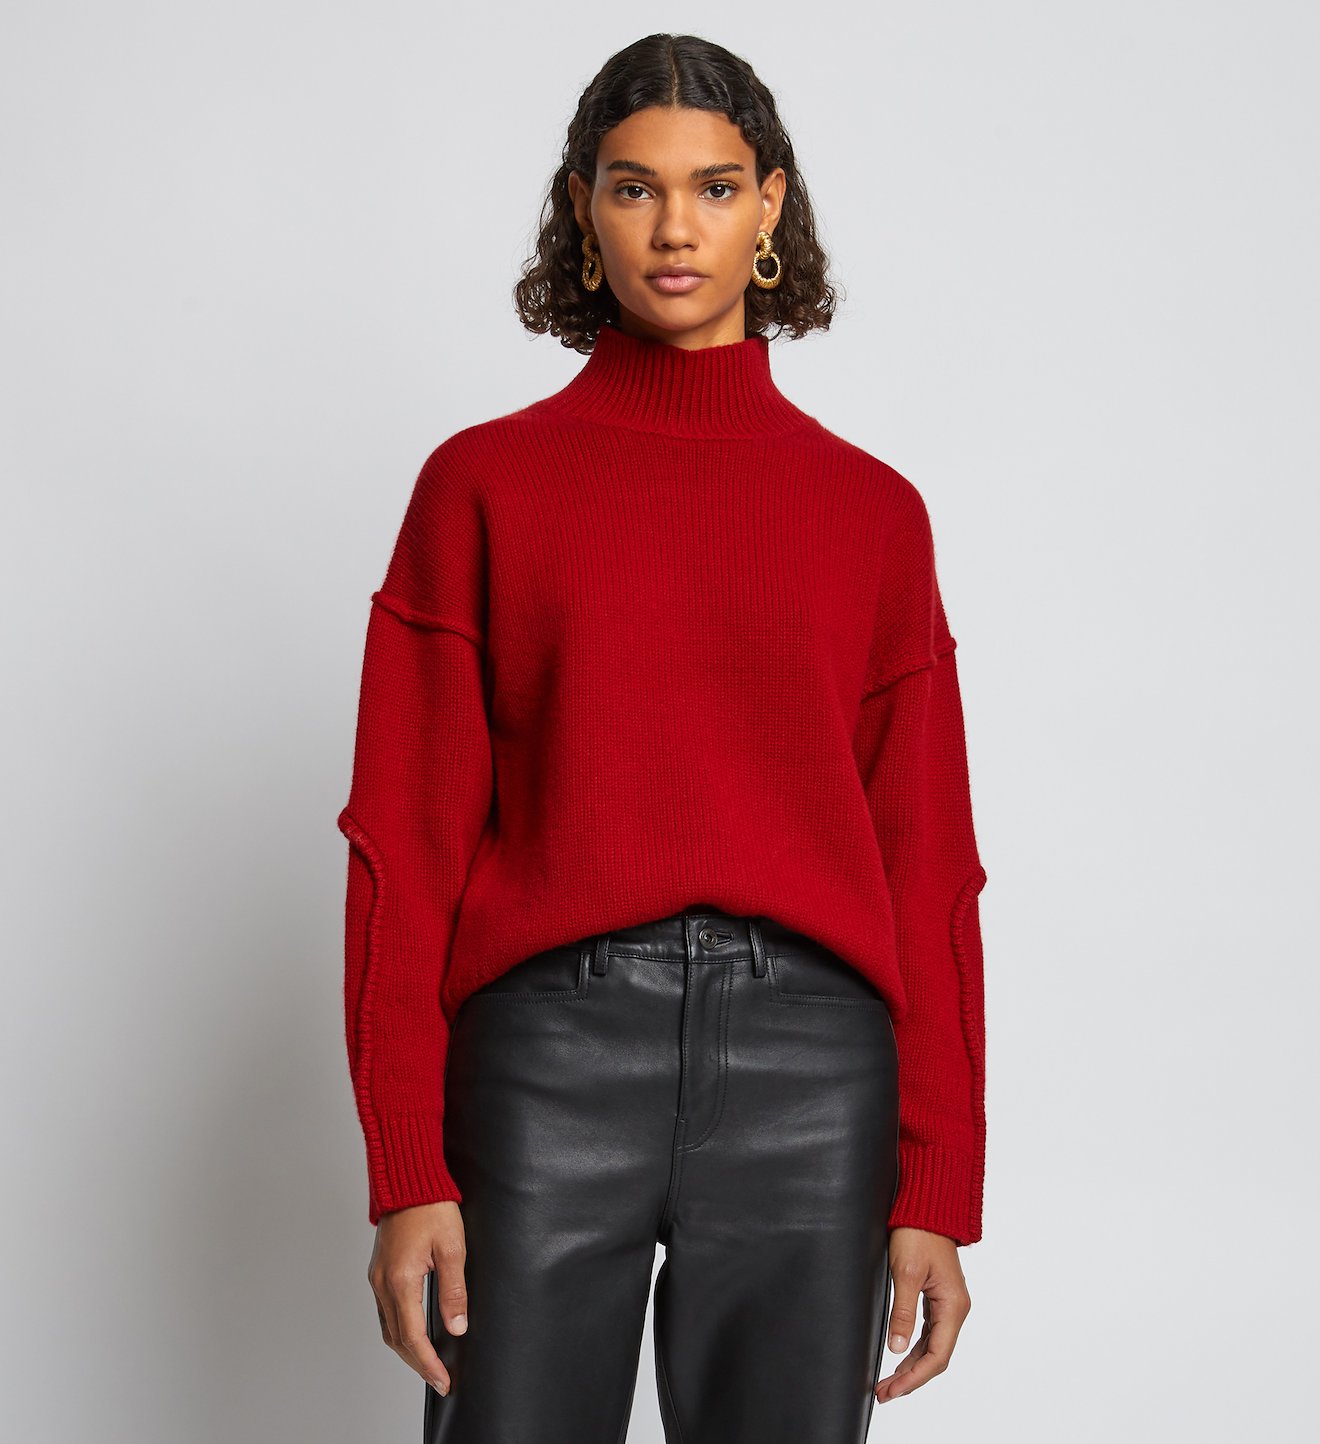 Wool Cashmere Turtleneck Sweater in red | Proenza Schouler